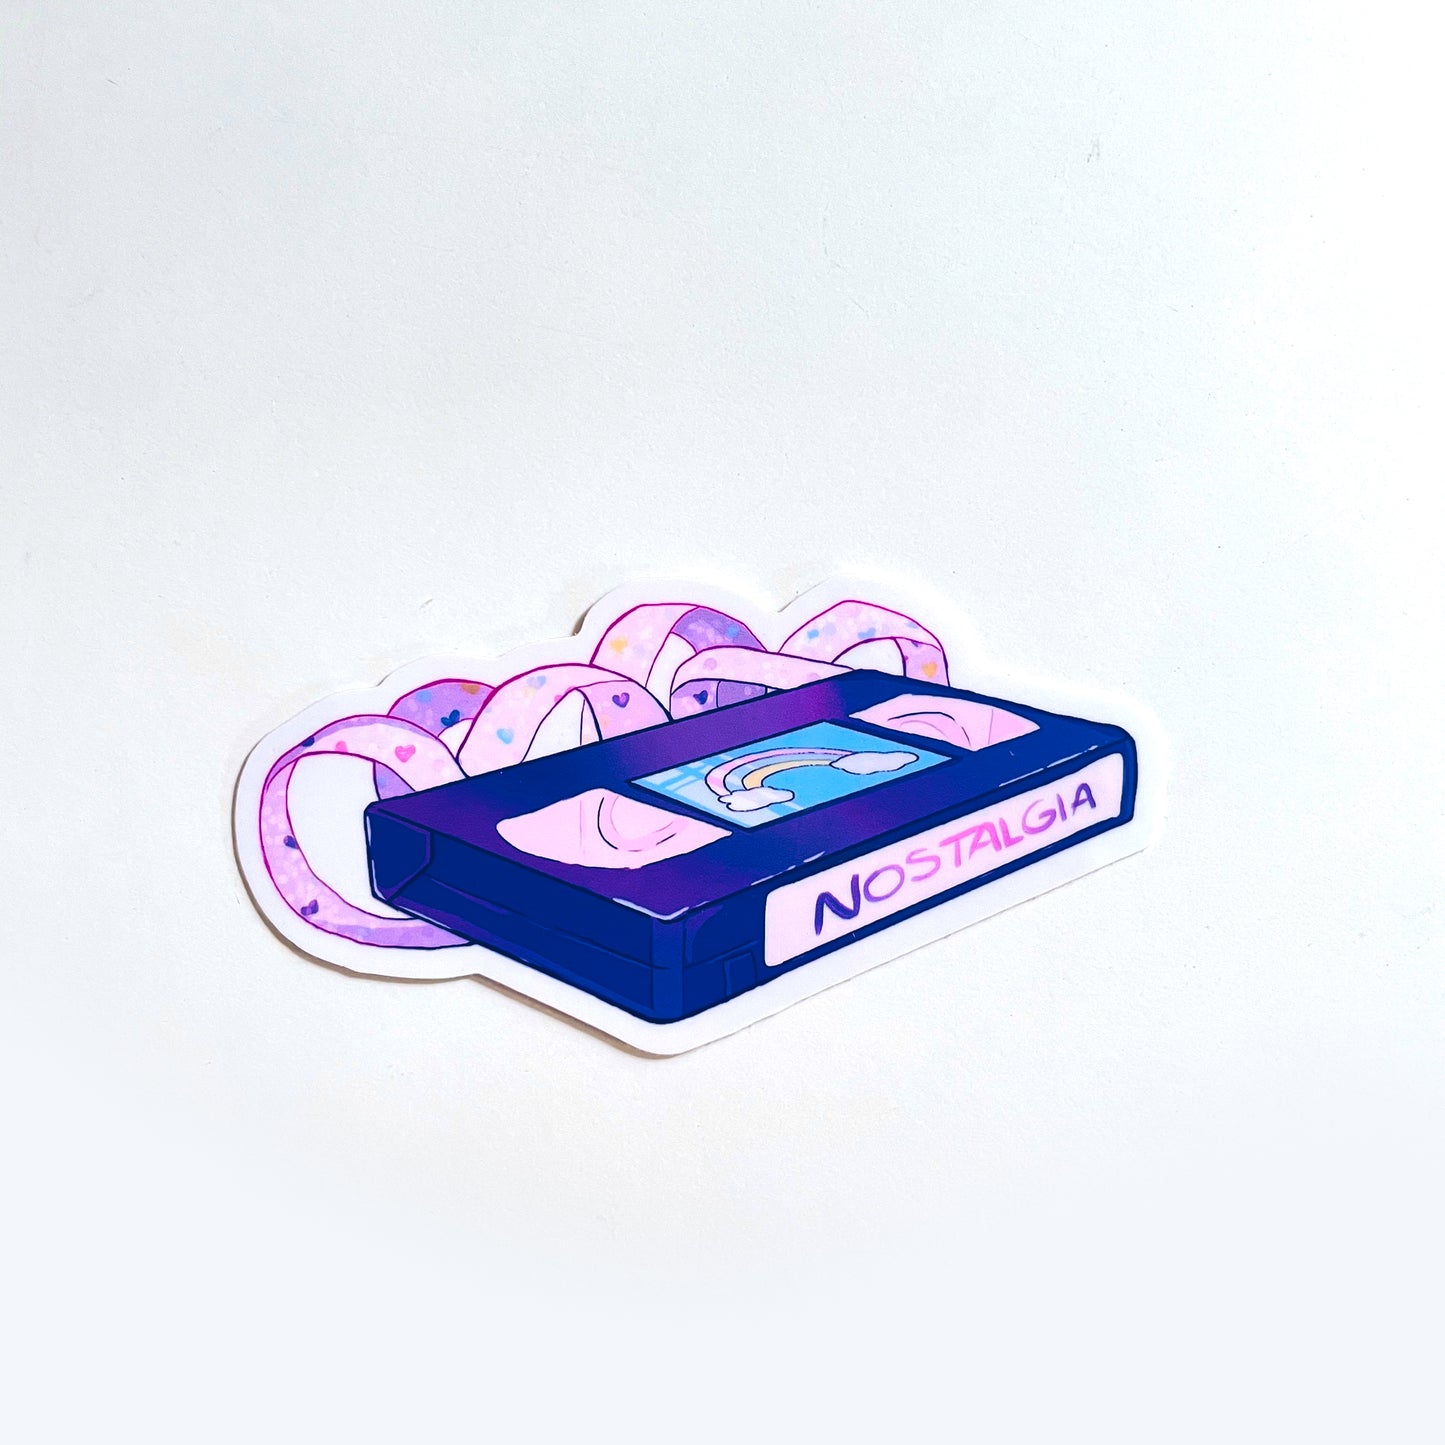 90s Nostalgia Series: Rainbow VHS Sticker